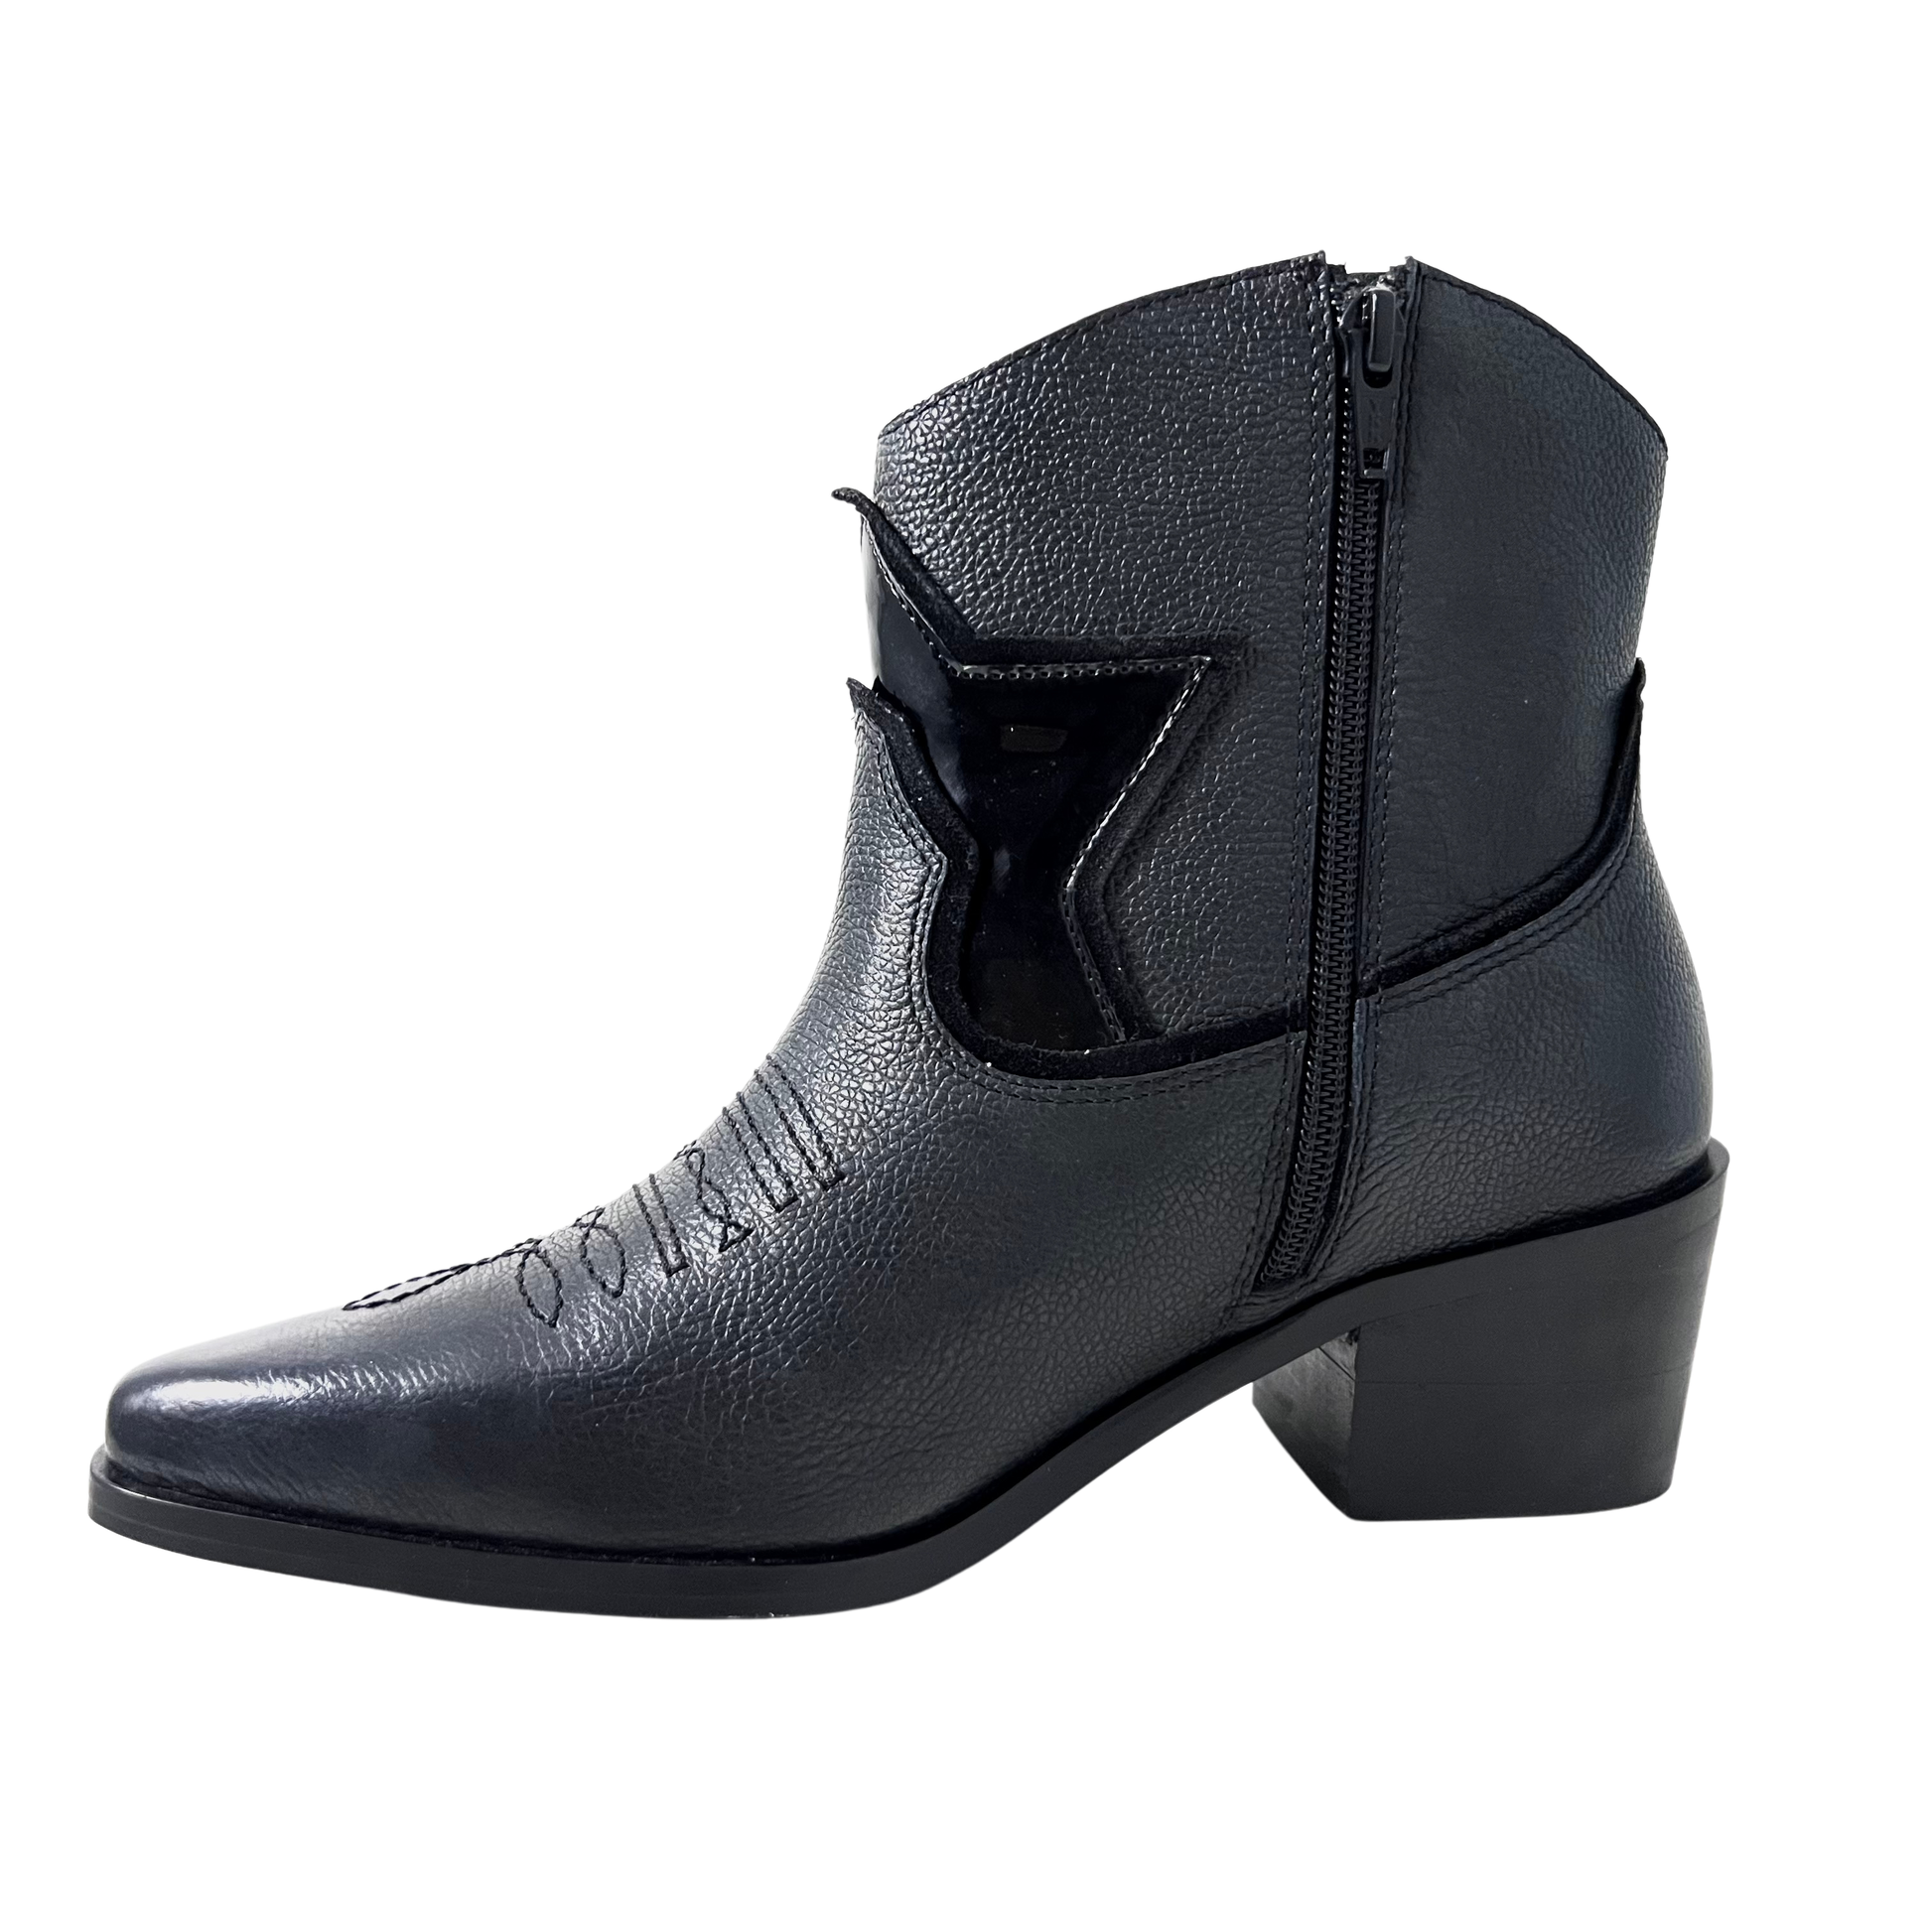 designer star western leather ladies boot in black color